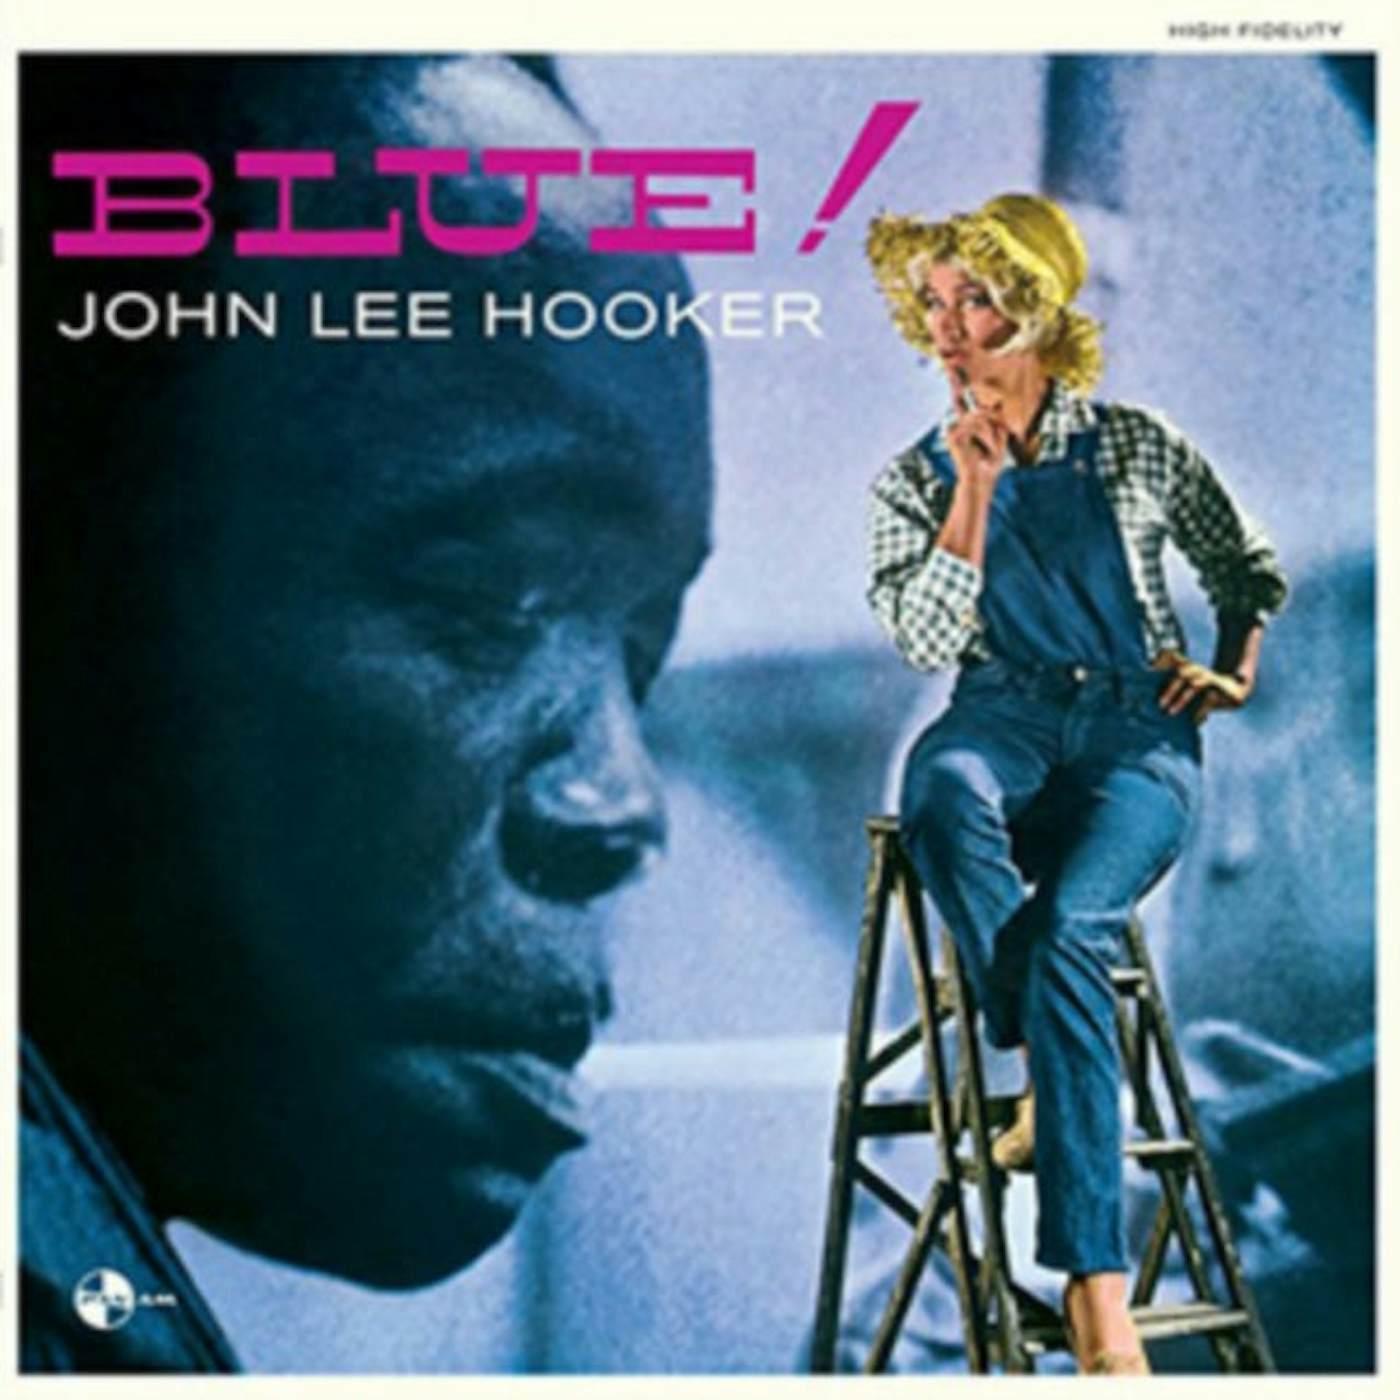 John Lee Hooker LP - Blue! (Vinyl)